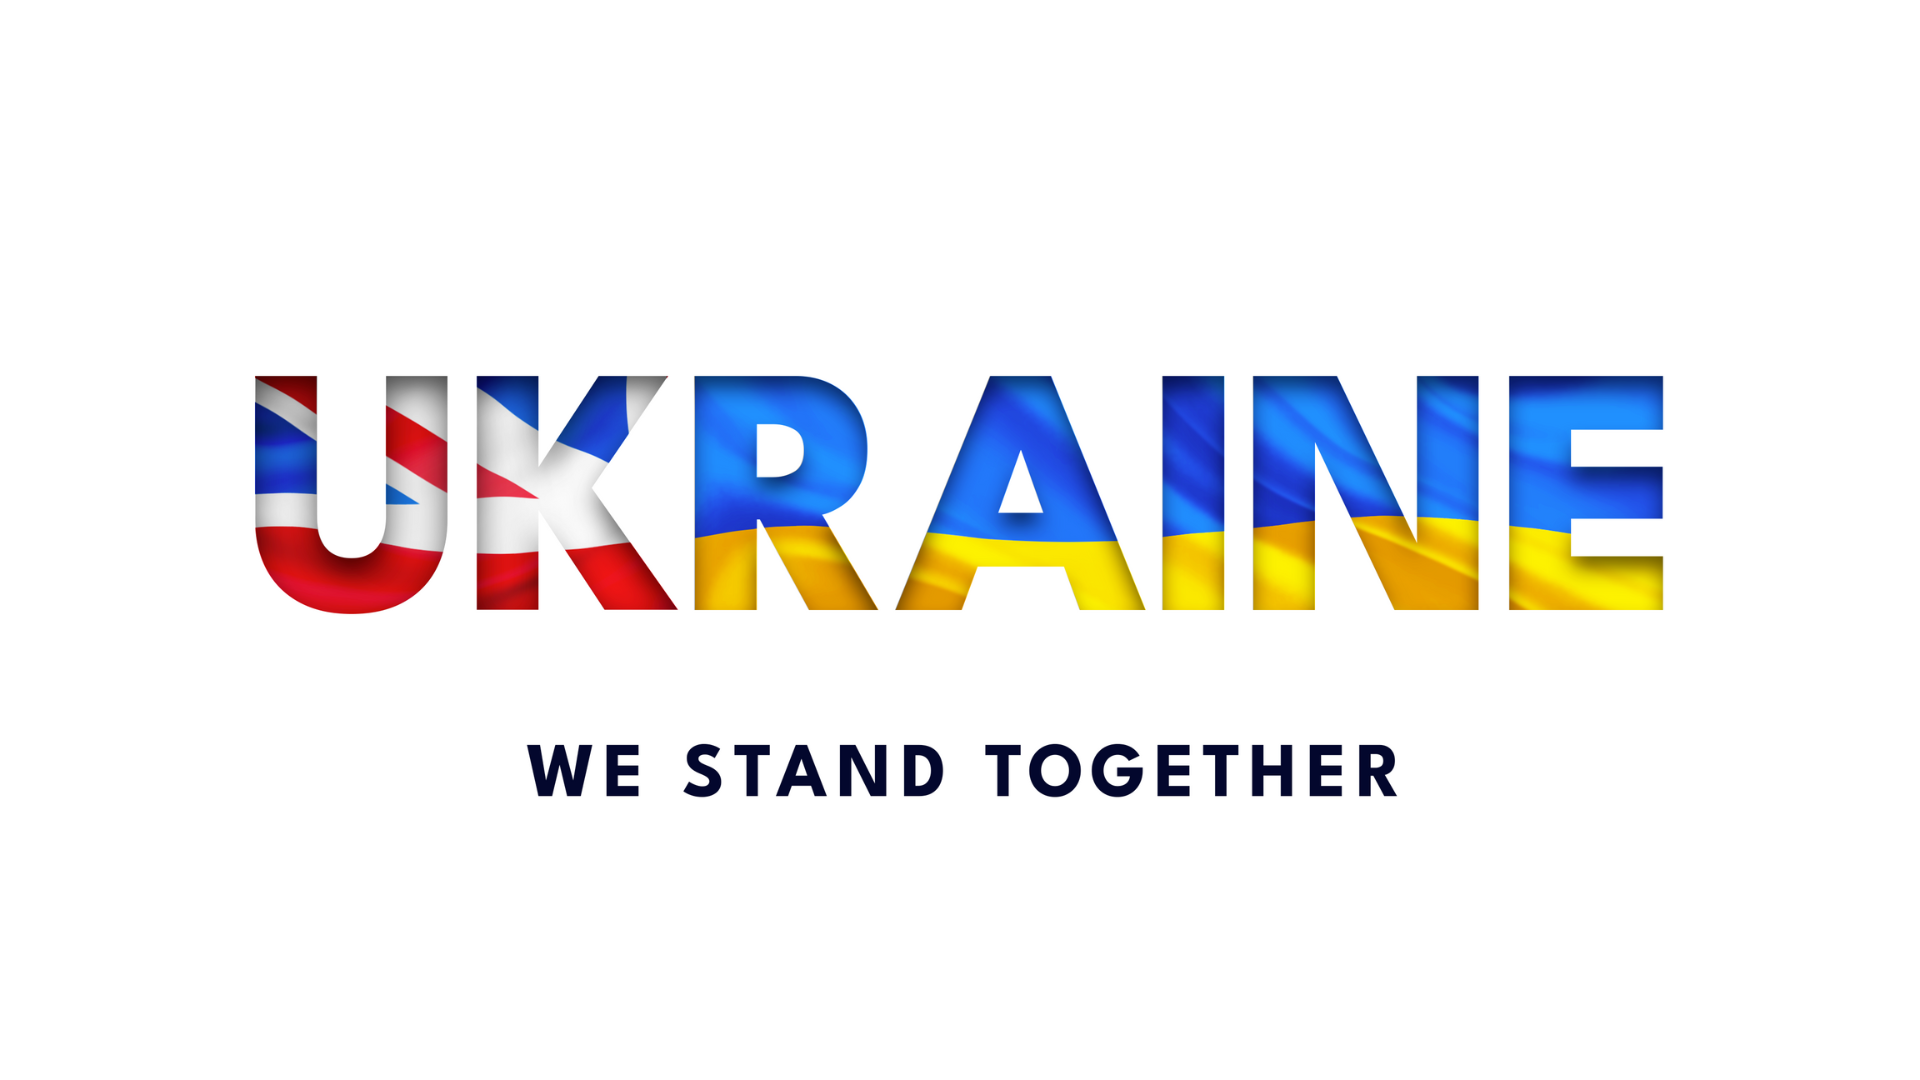 UK and Ukraine - We Stand Together